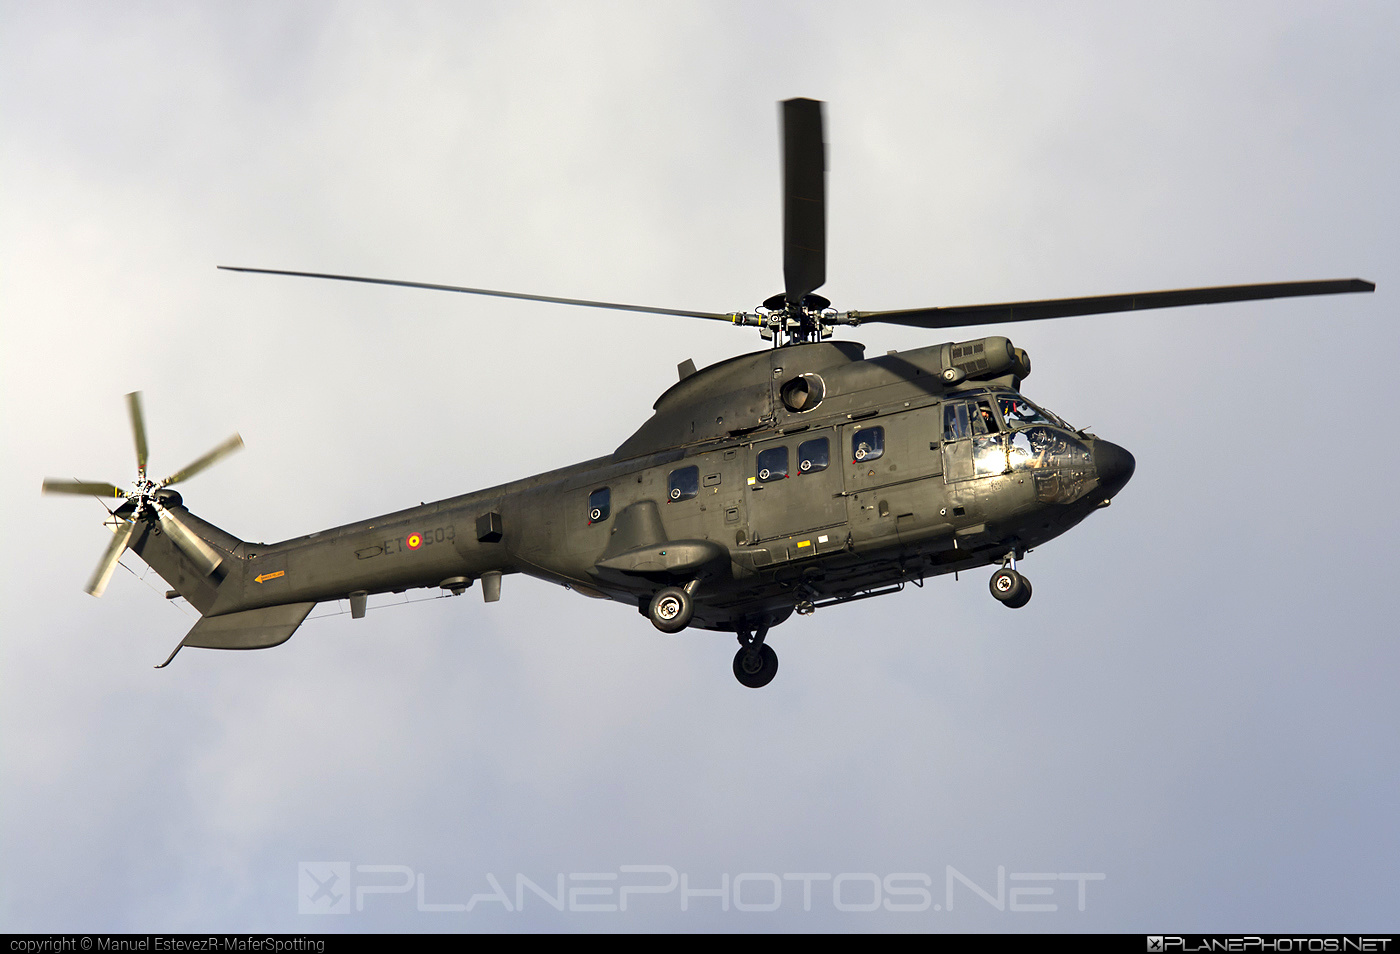 Aerospatiale AS332 B1 Super Puma - HU.21-05 operated by Ejército de Tierra (Spanish Army) #aerospatiale #as332 #as332b1 #superpuma